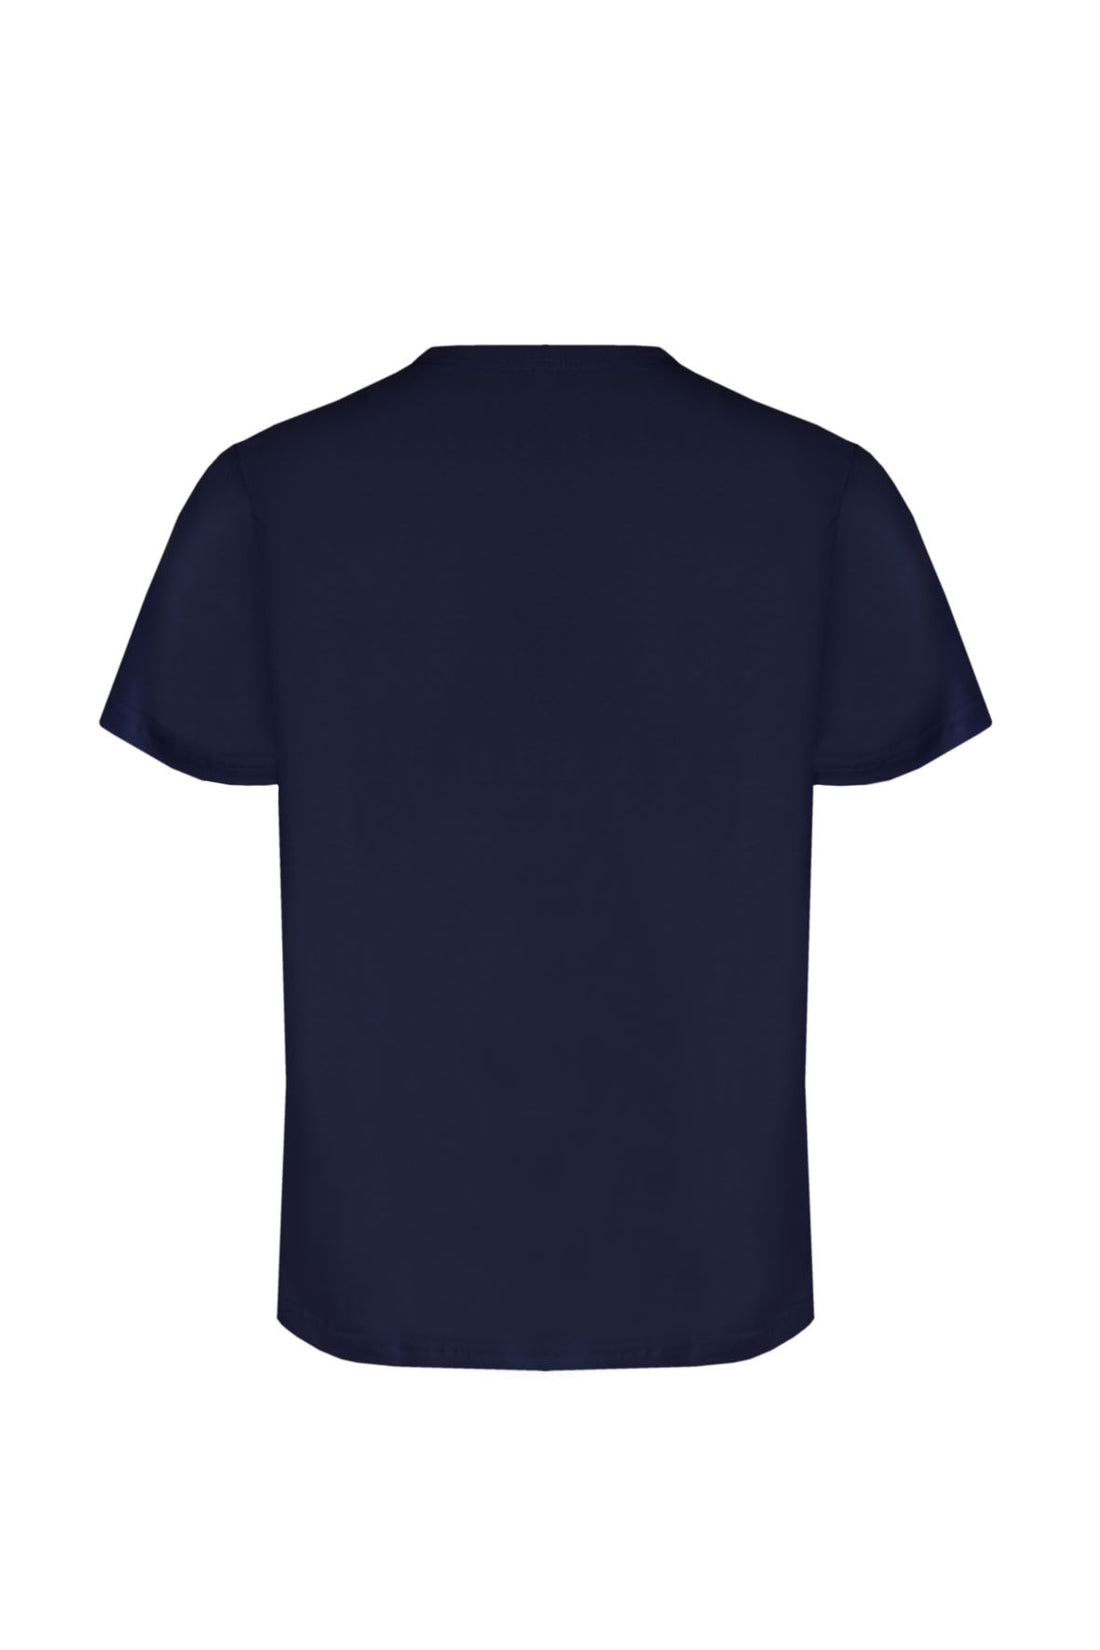 Elastic T-Shirt with Primo Emporio Chest Print - Blue